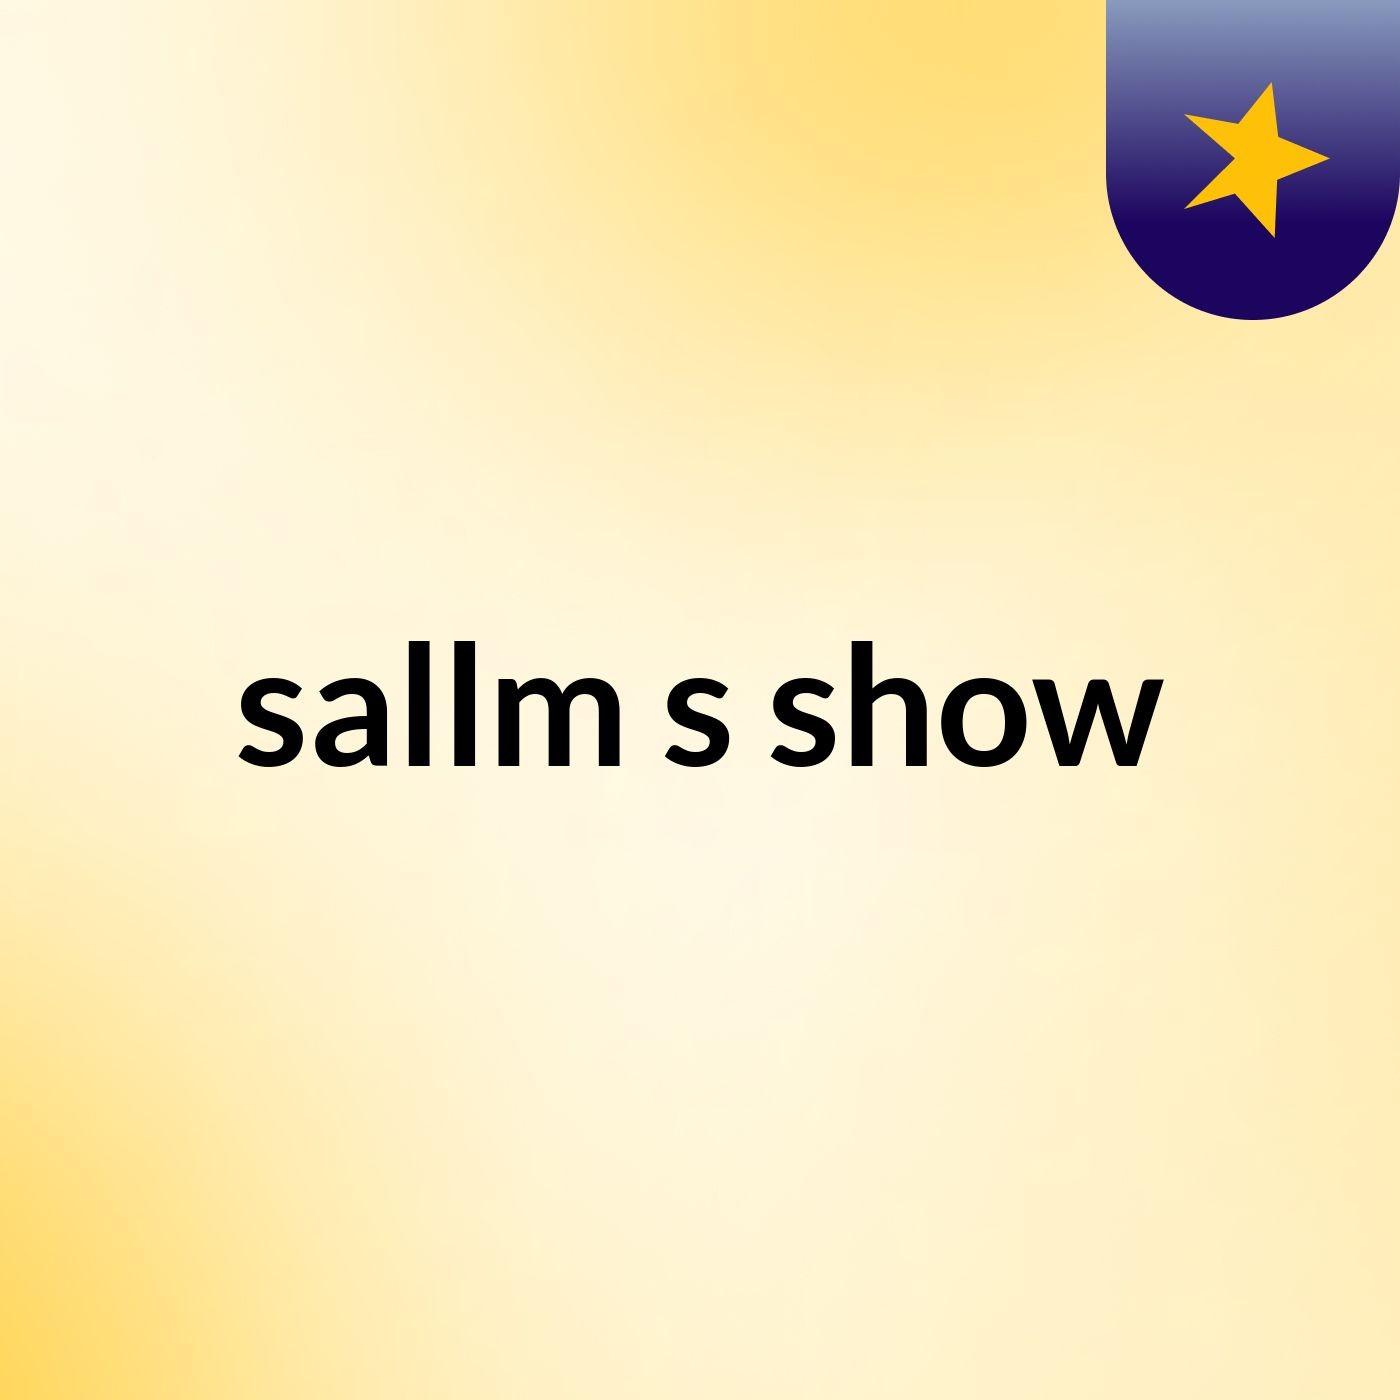 sallm's show